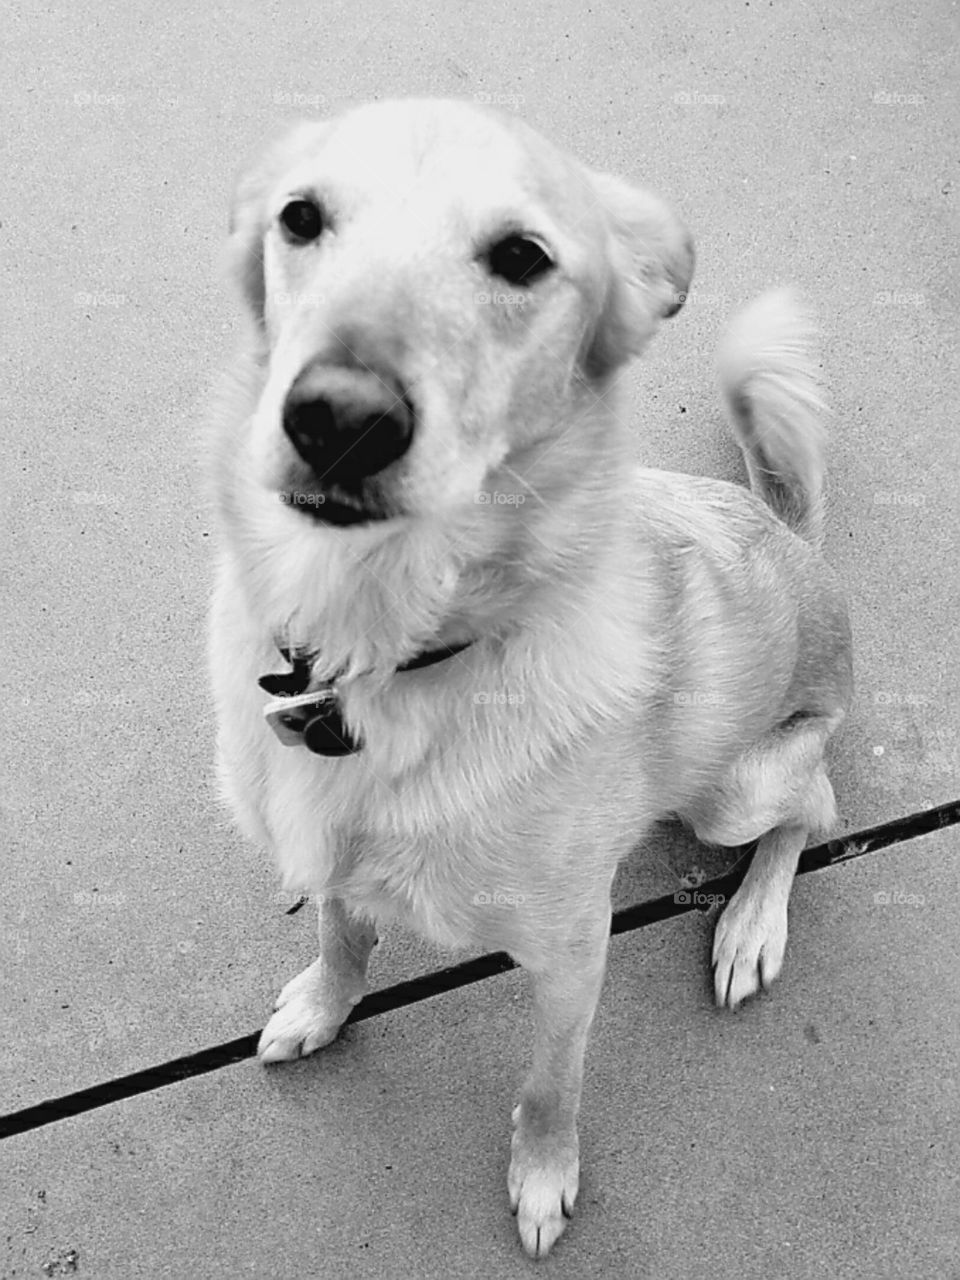 Dog Close-up black and white